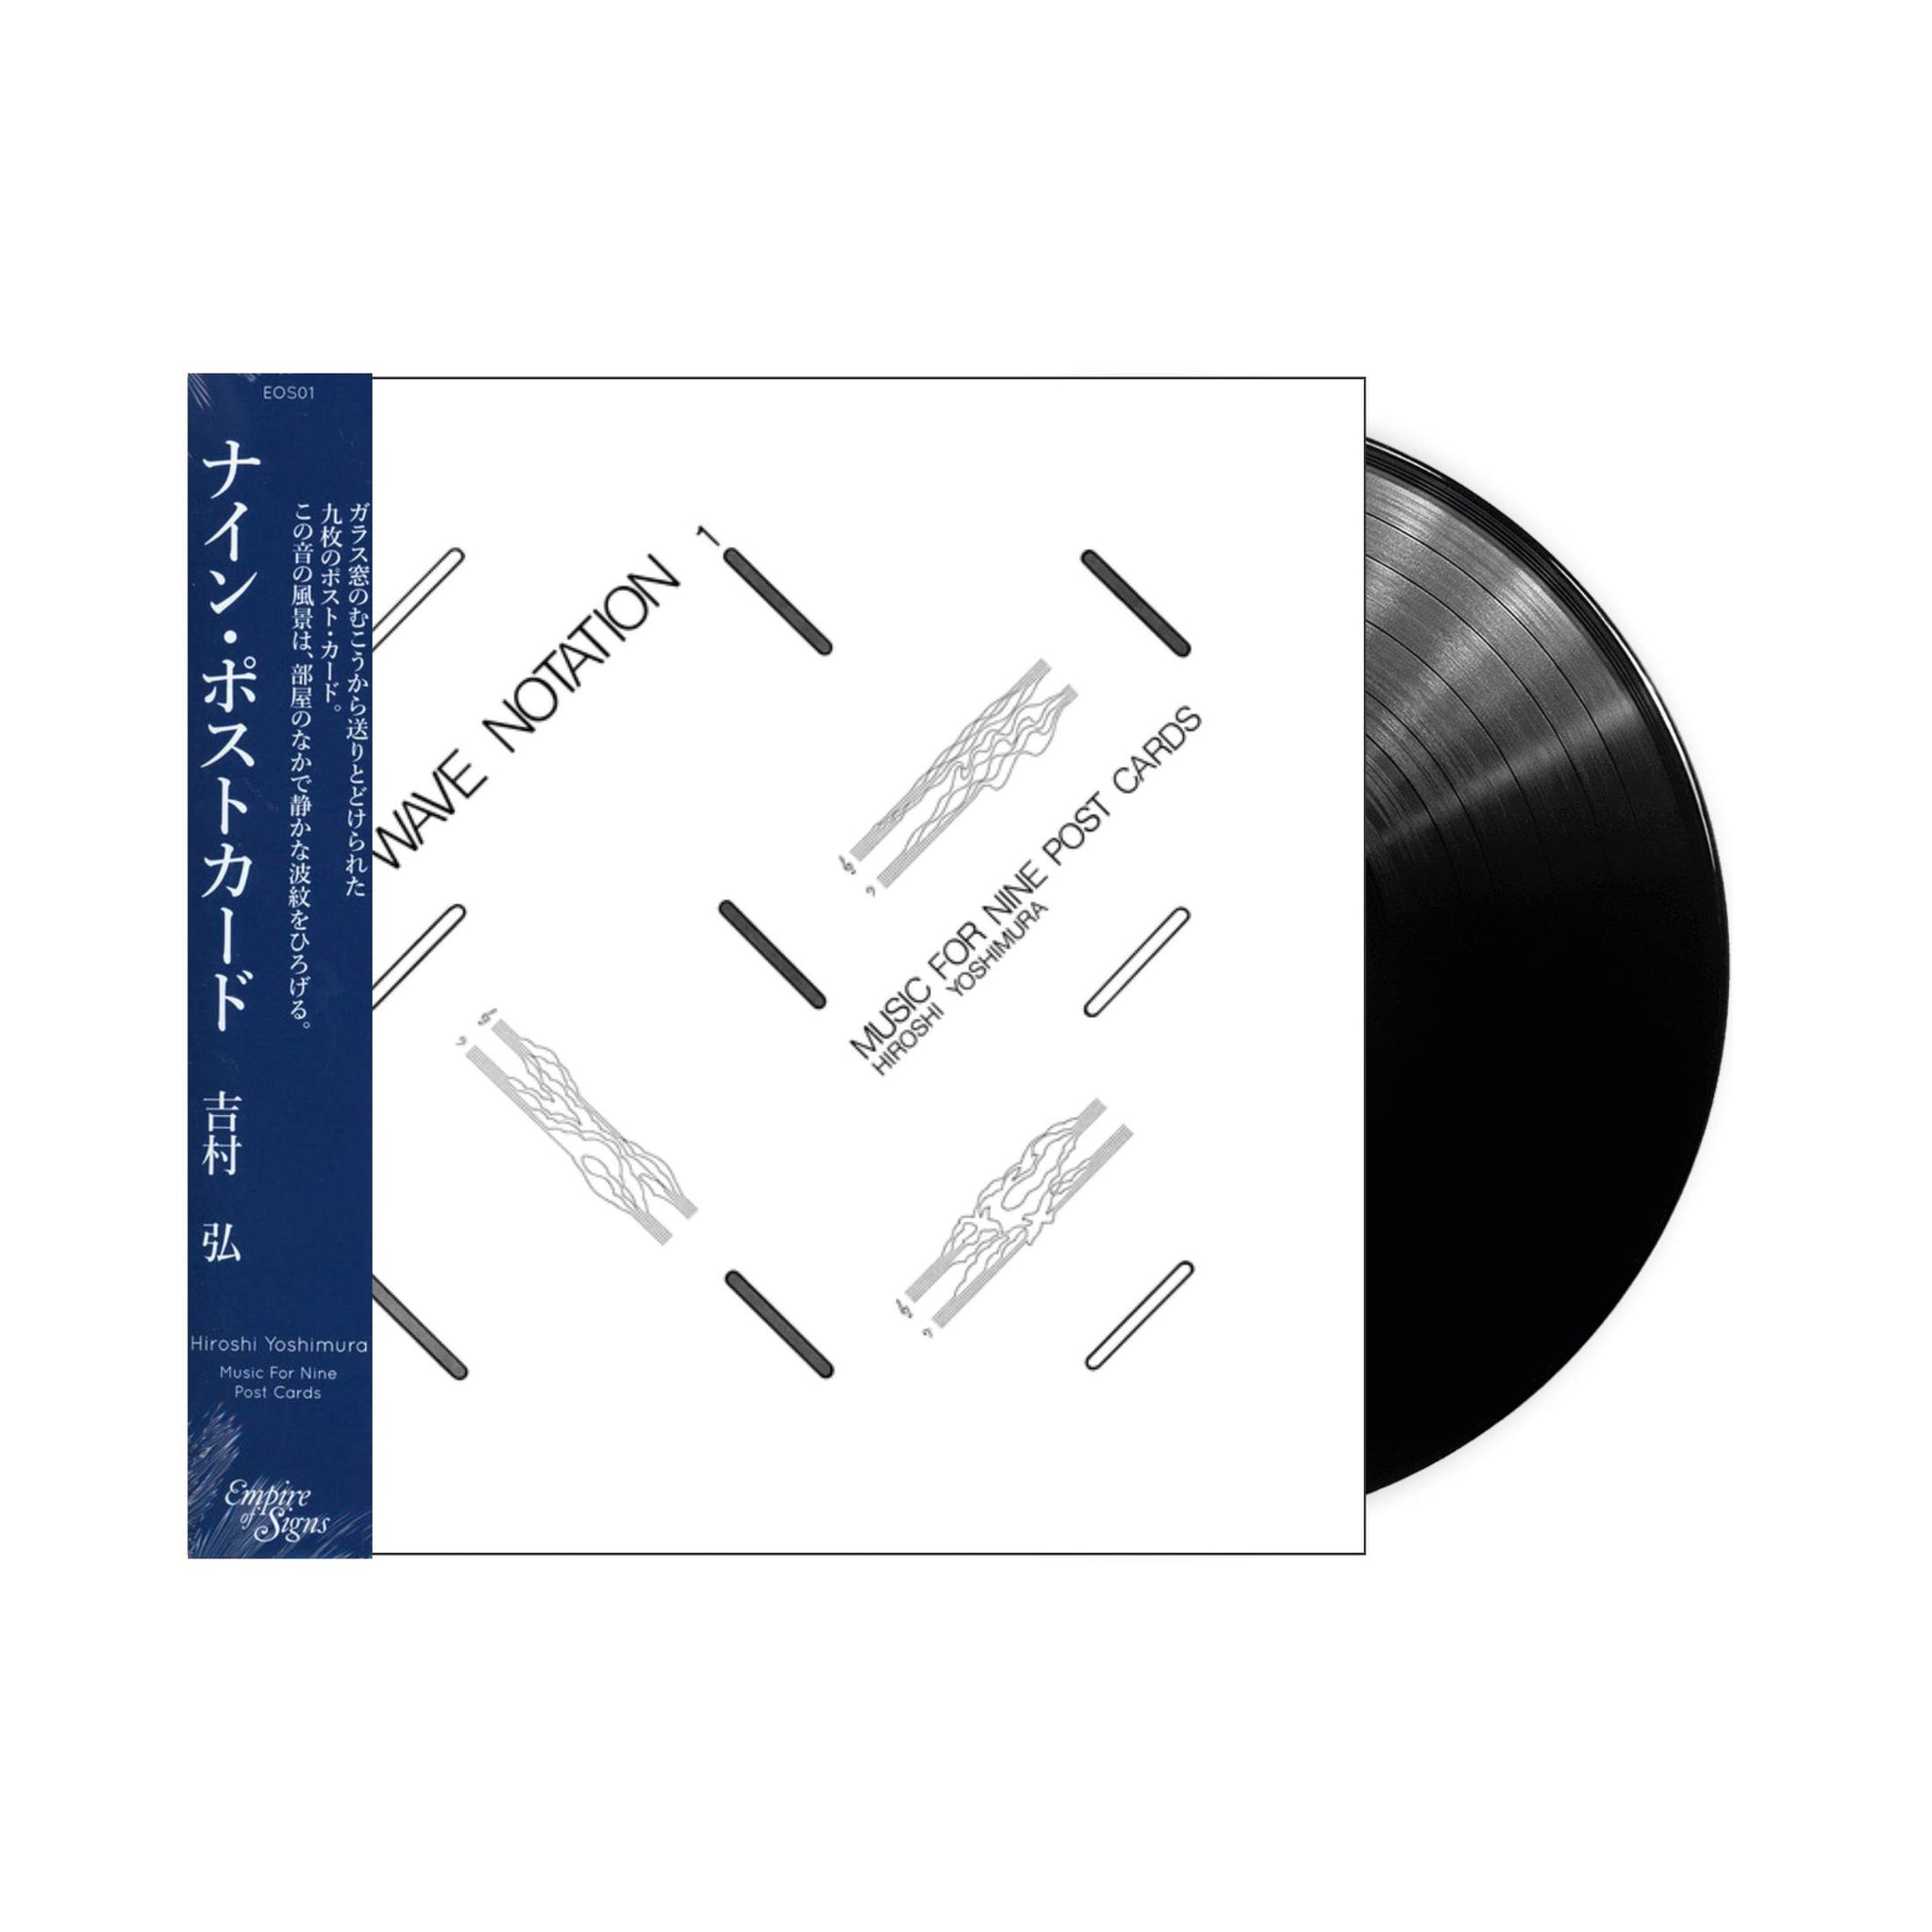 Hiroshi Yoshimura - Music For Nine Post Cards LP (Black Vinyl